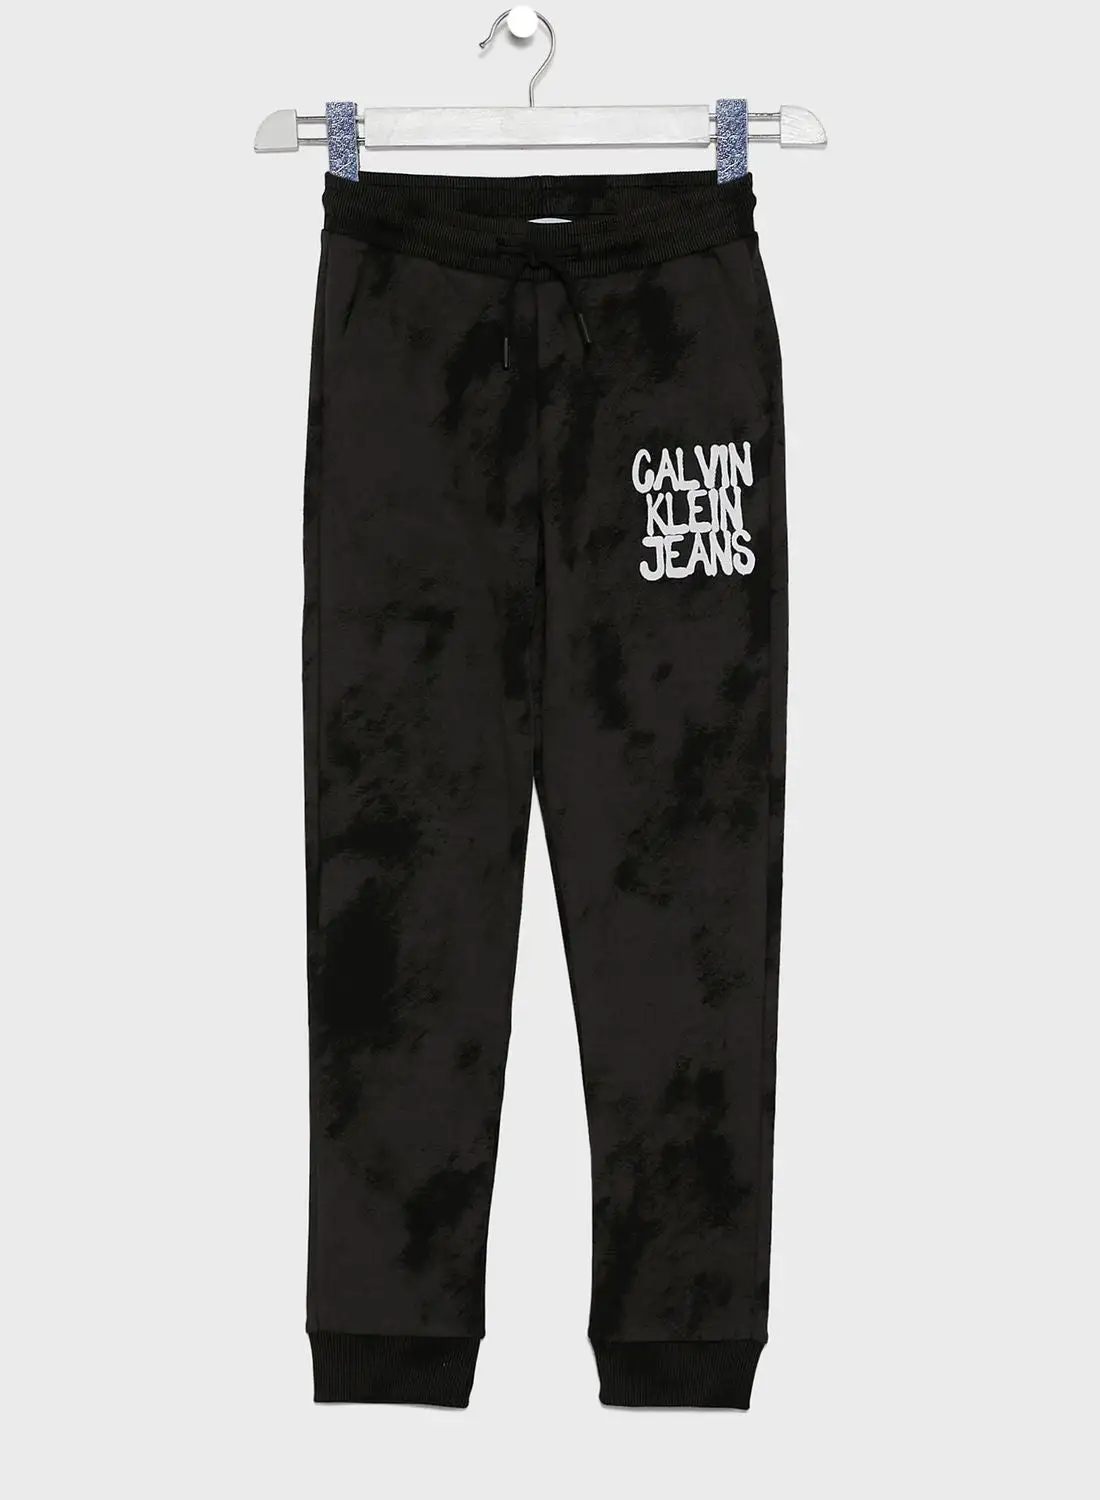 Calvin Klein Jeans Kids Cloud Printed Sweatpants